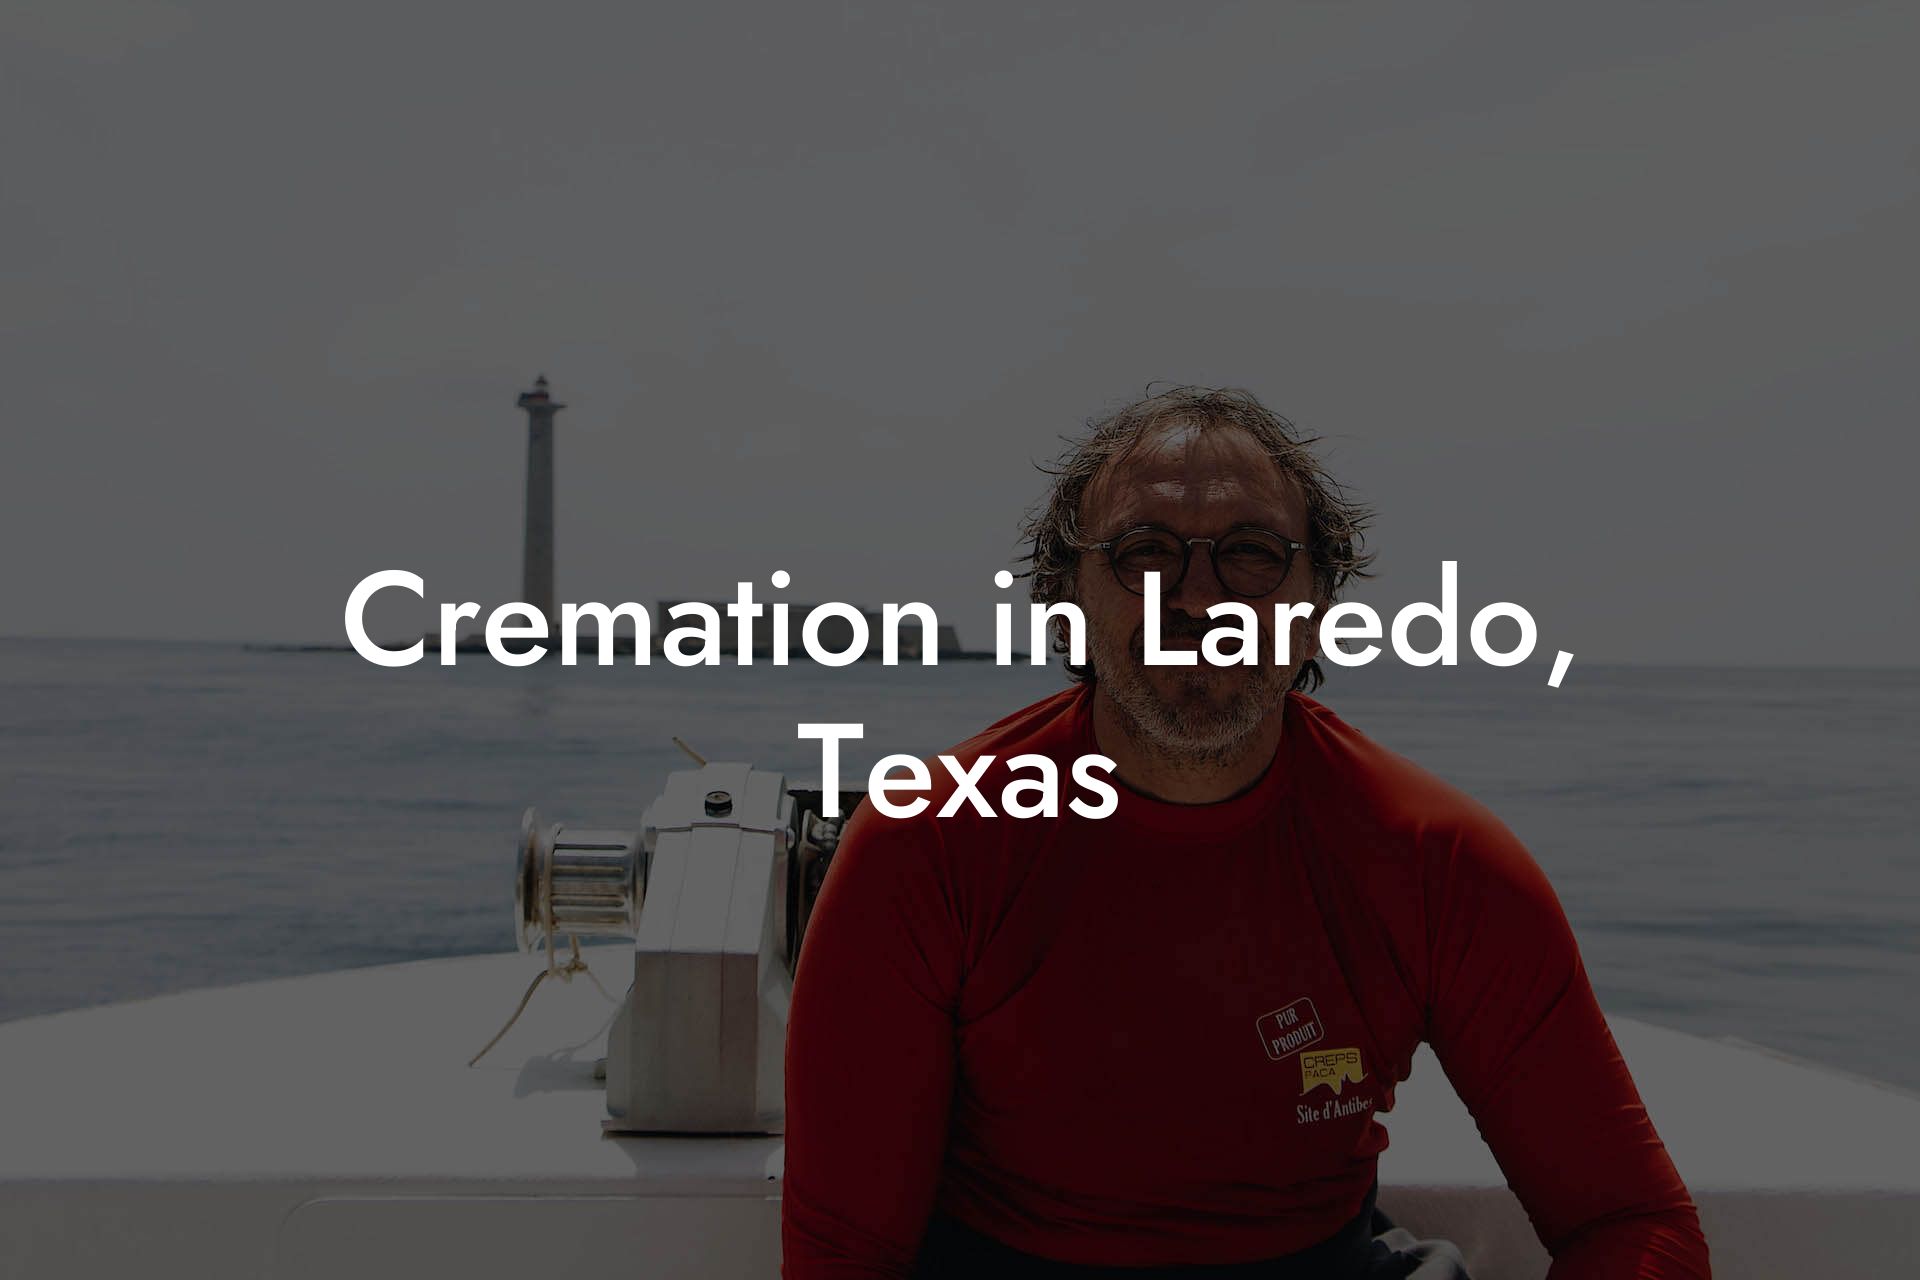 Cremation in Laredo, Texas